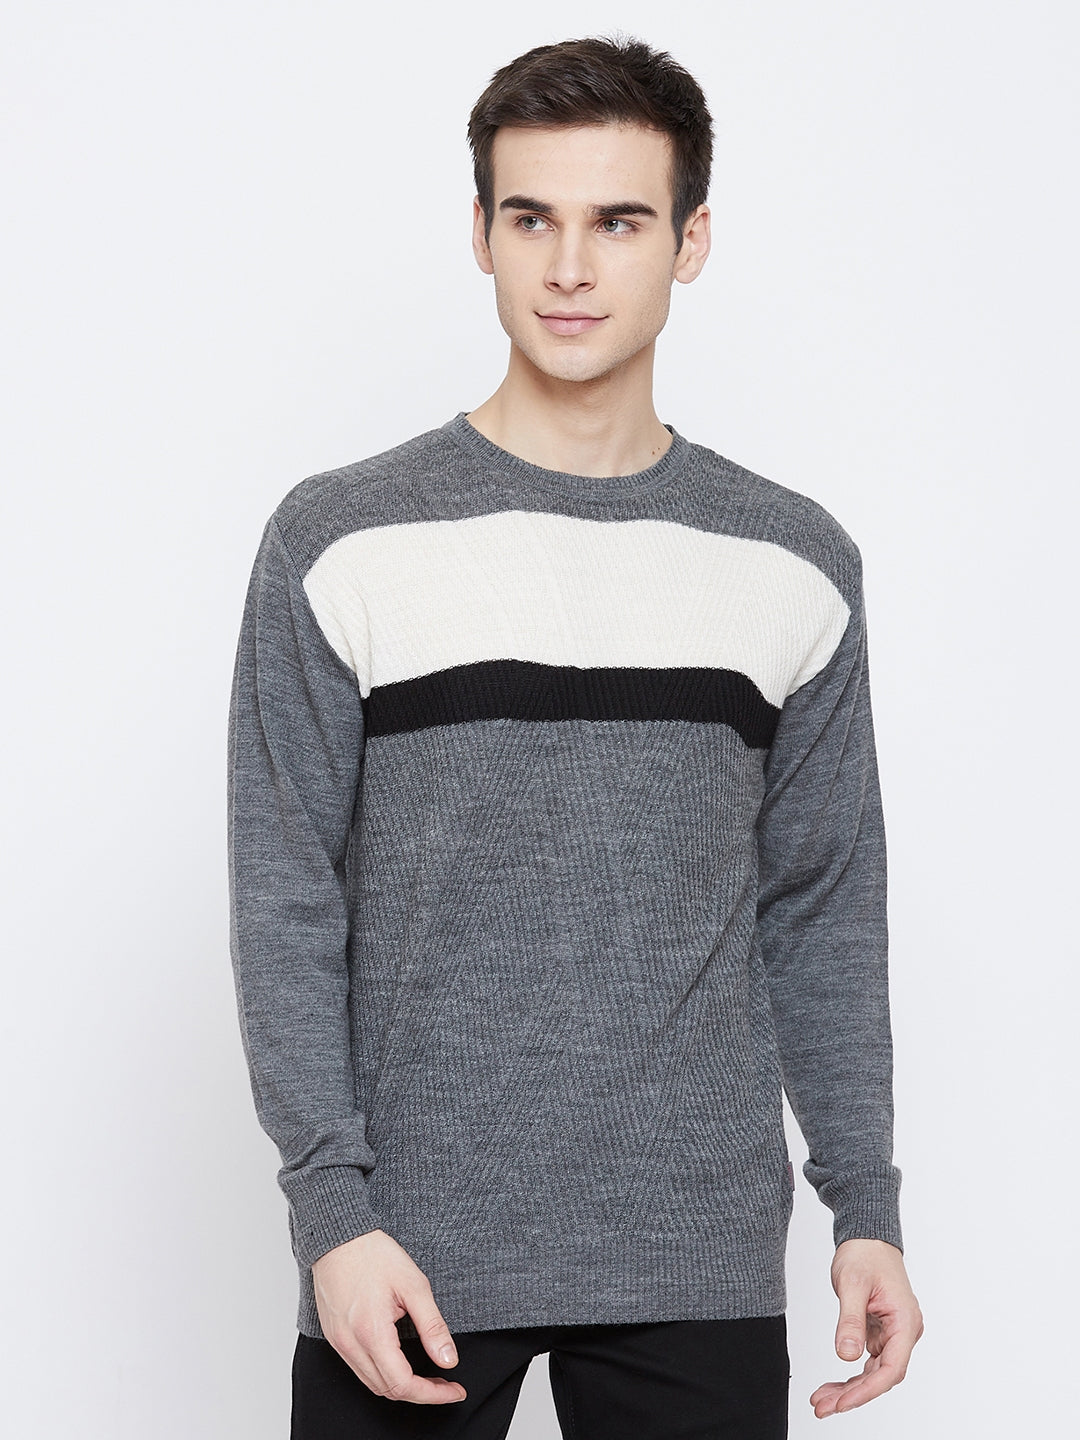 Grey Colorblocked Round Neck Sweater - Men Sweaters